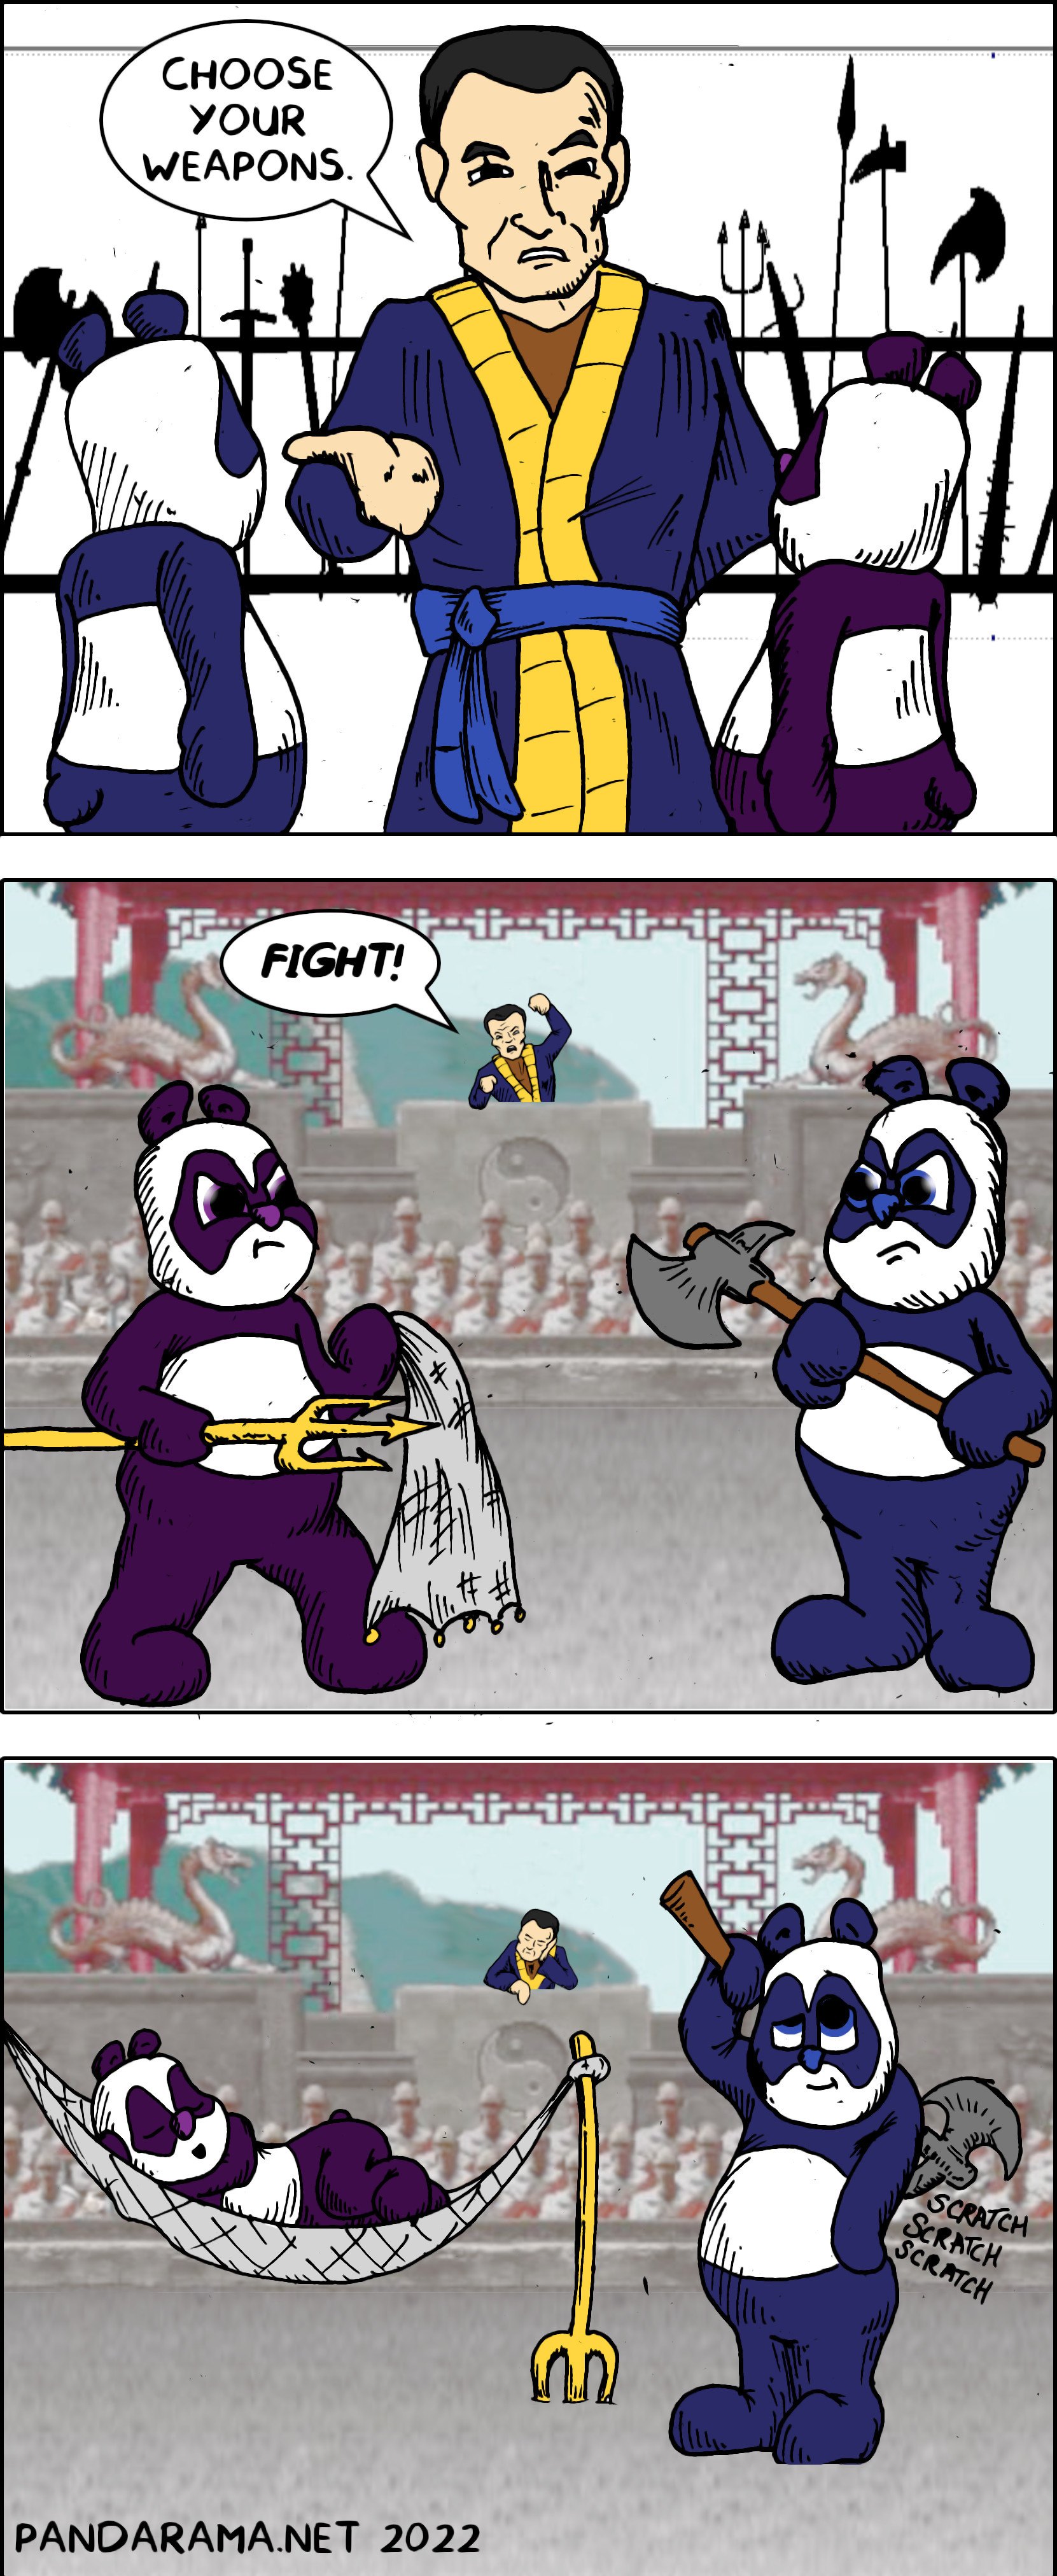 panadarama comic strip. lazy gladiator panda uses a net and trident to make a hammock against a panda using an axe as a backscratcher.